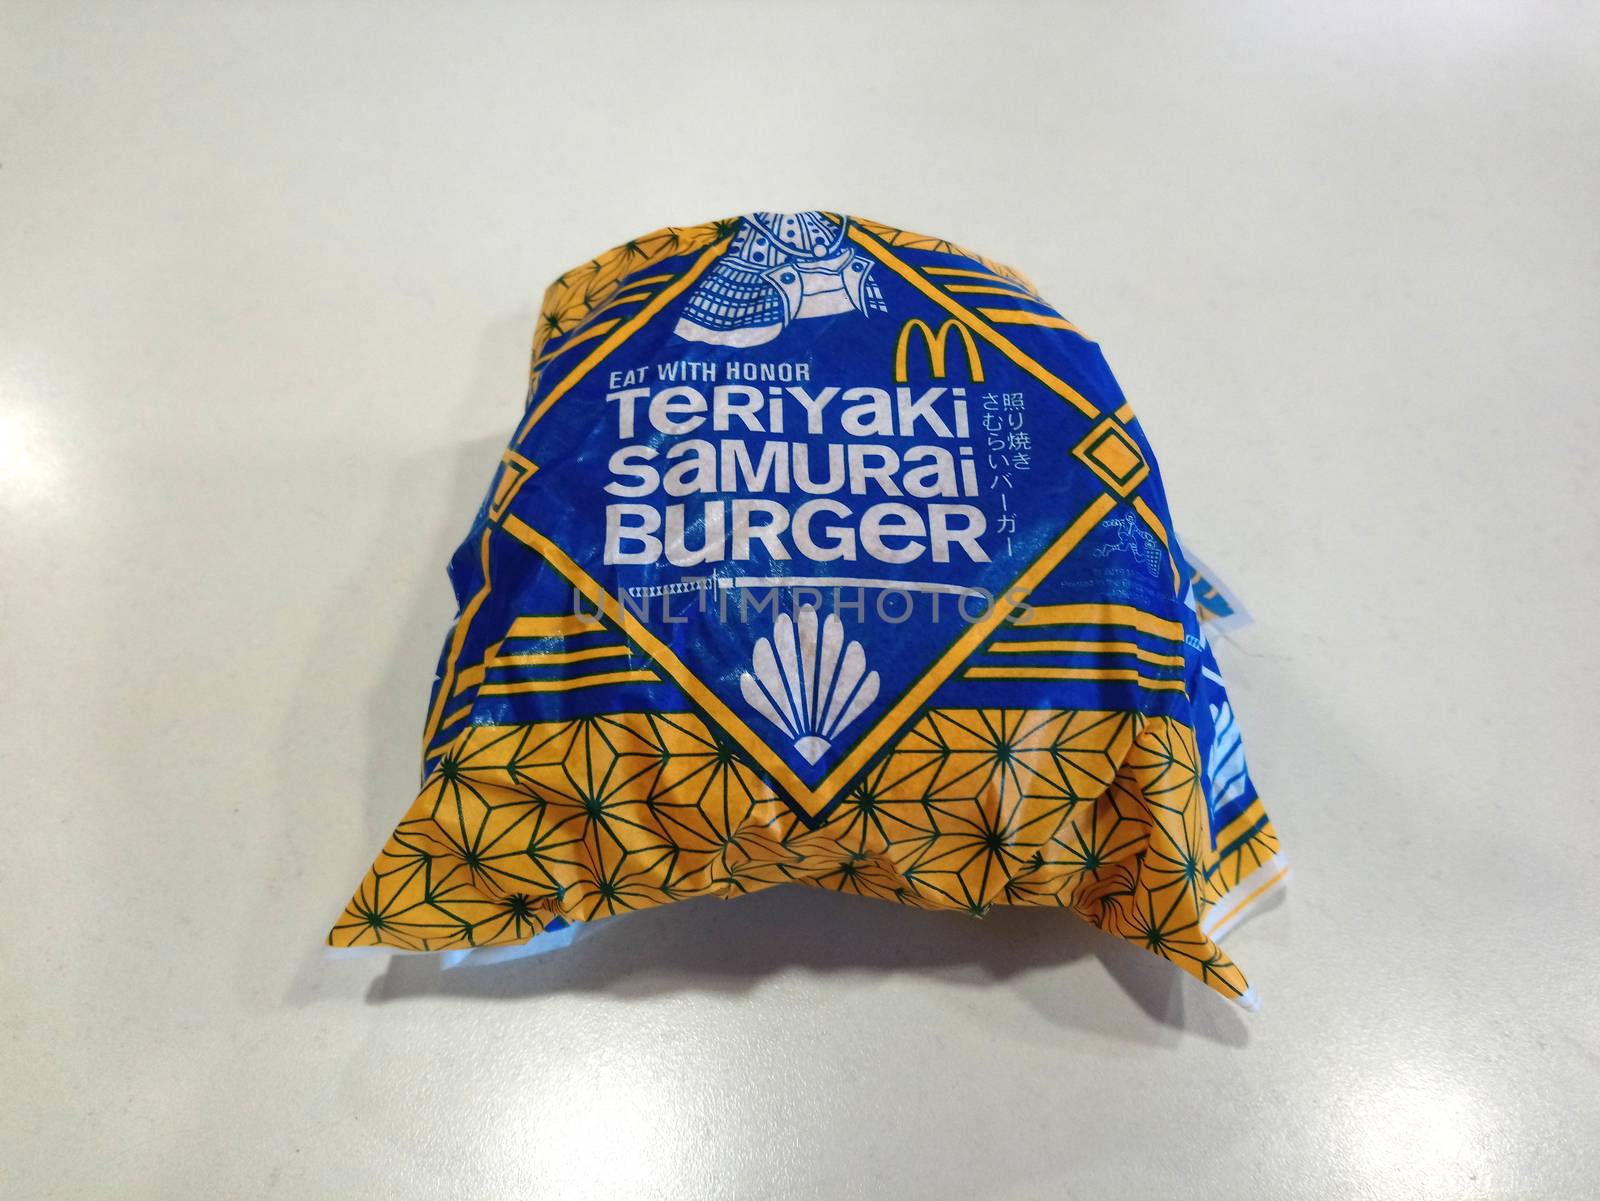 Mcdonalds teriyaki samurai burger in Manila, Philippines by imwaltersy